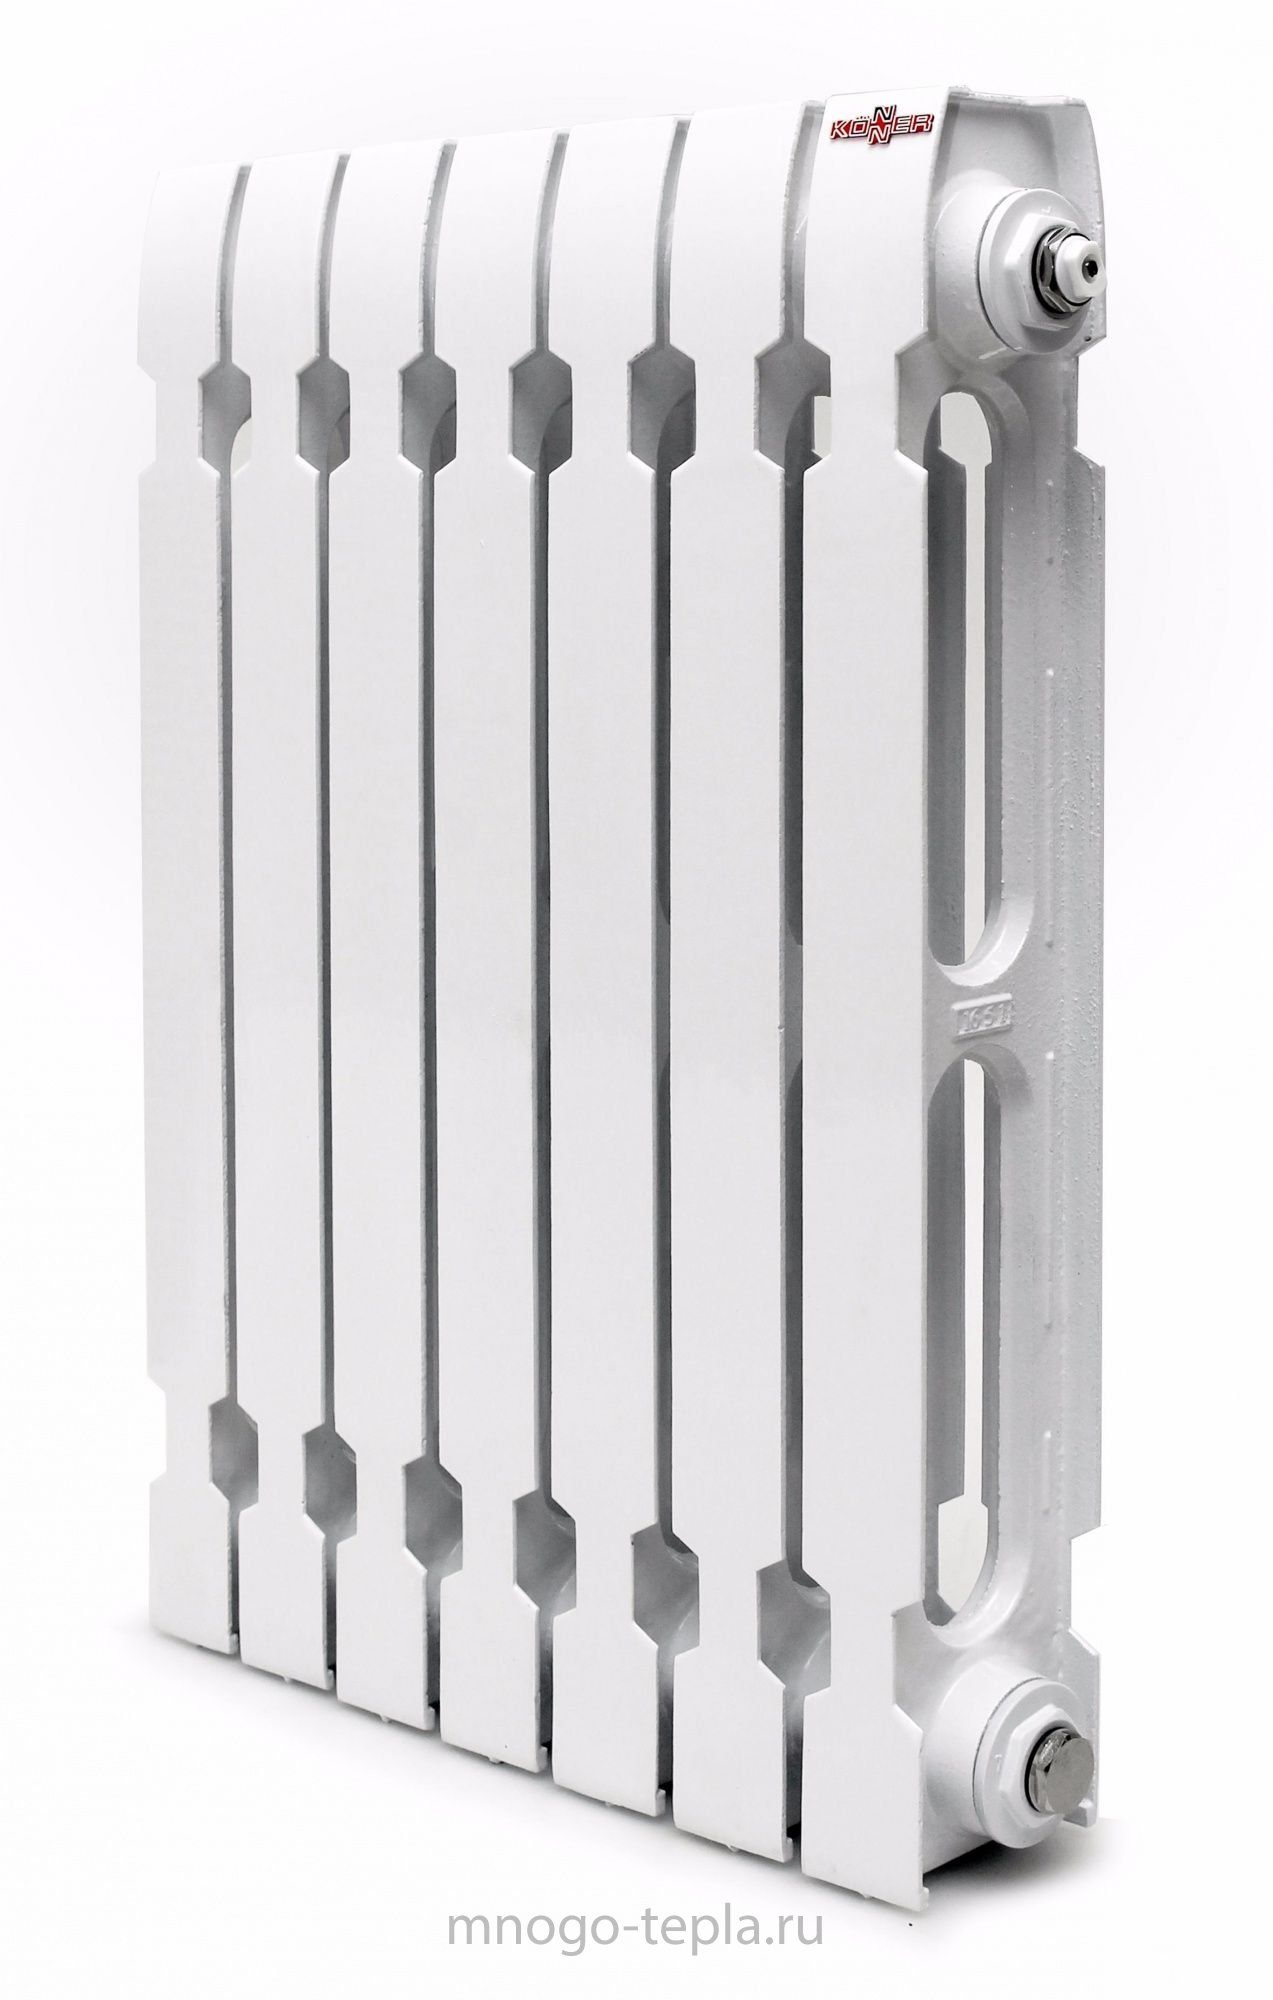  радиаторы  радиаторы Konner Модерн G1, 4 секции 